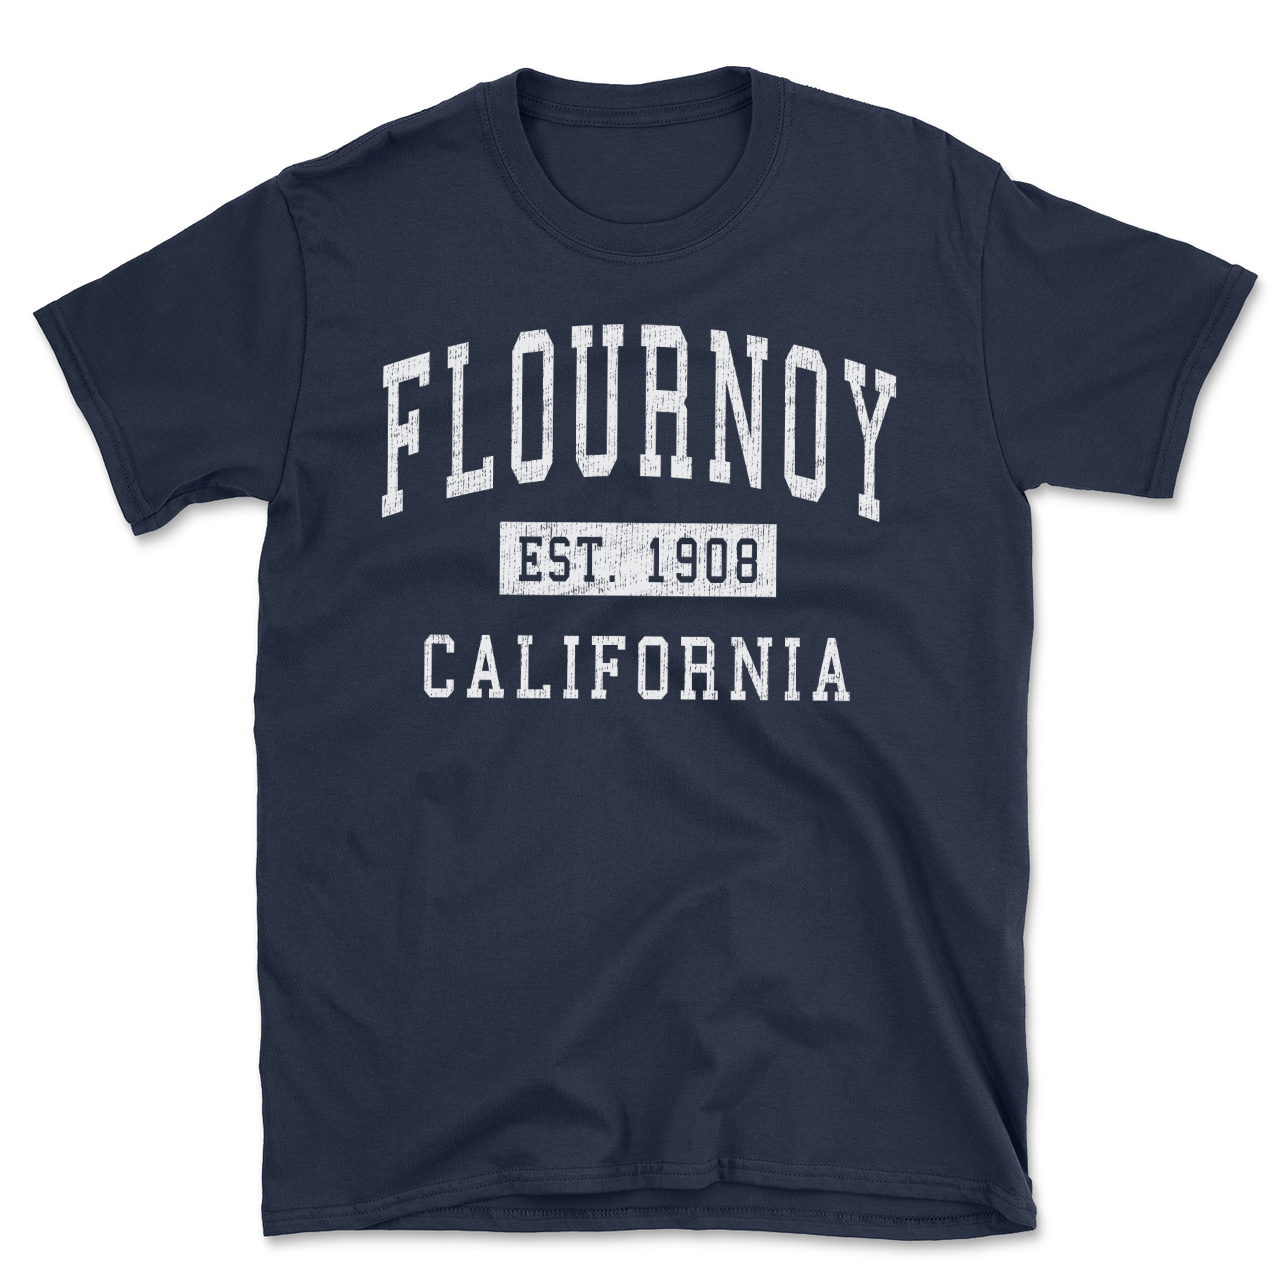 Flournoy California Classic Established Men's Cotton T-Shirt - image 1 of 1